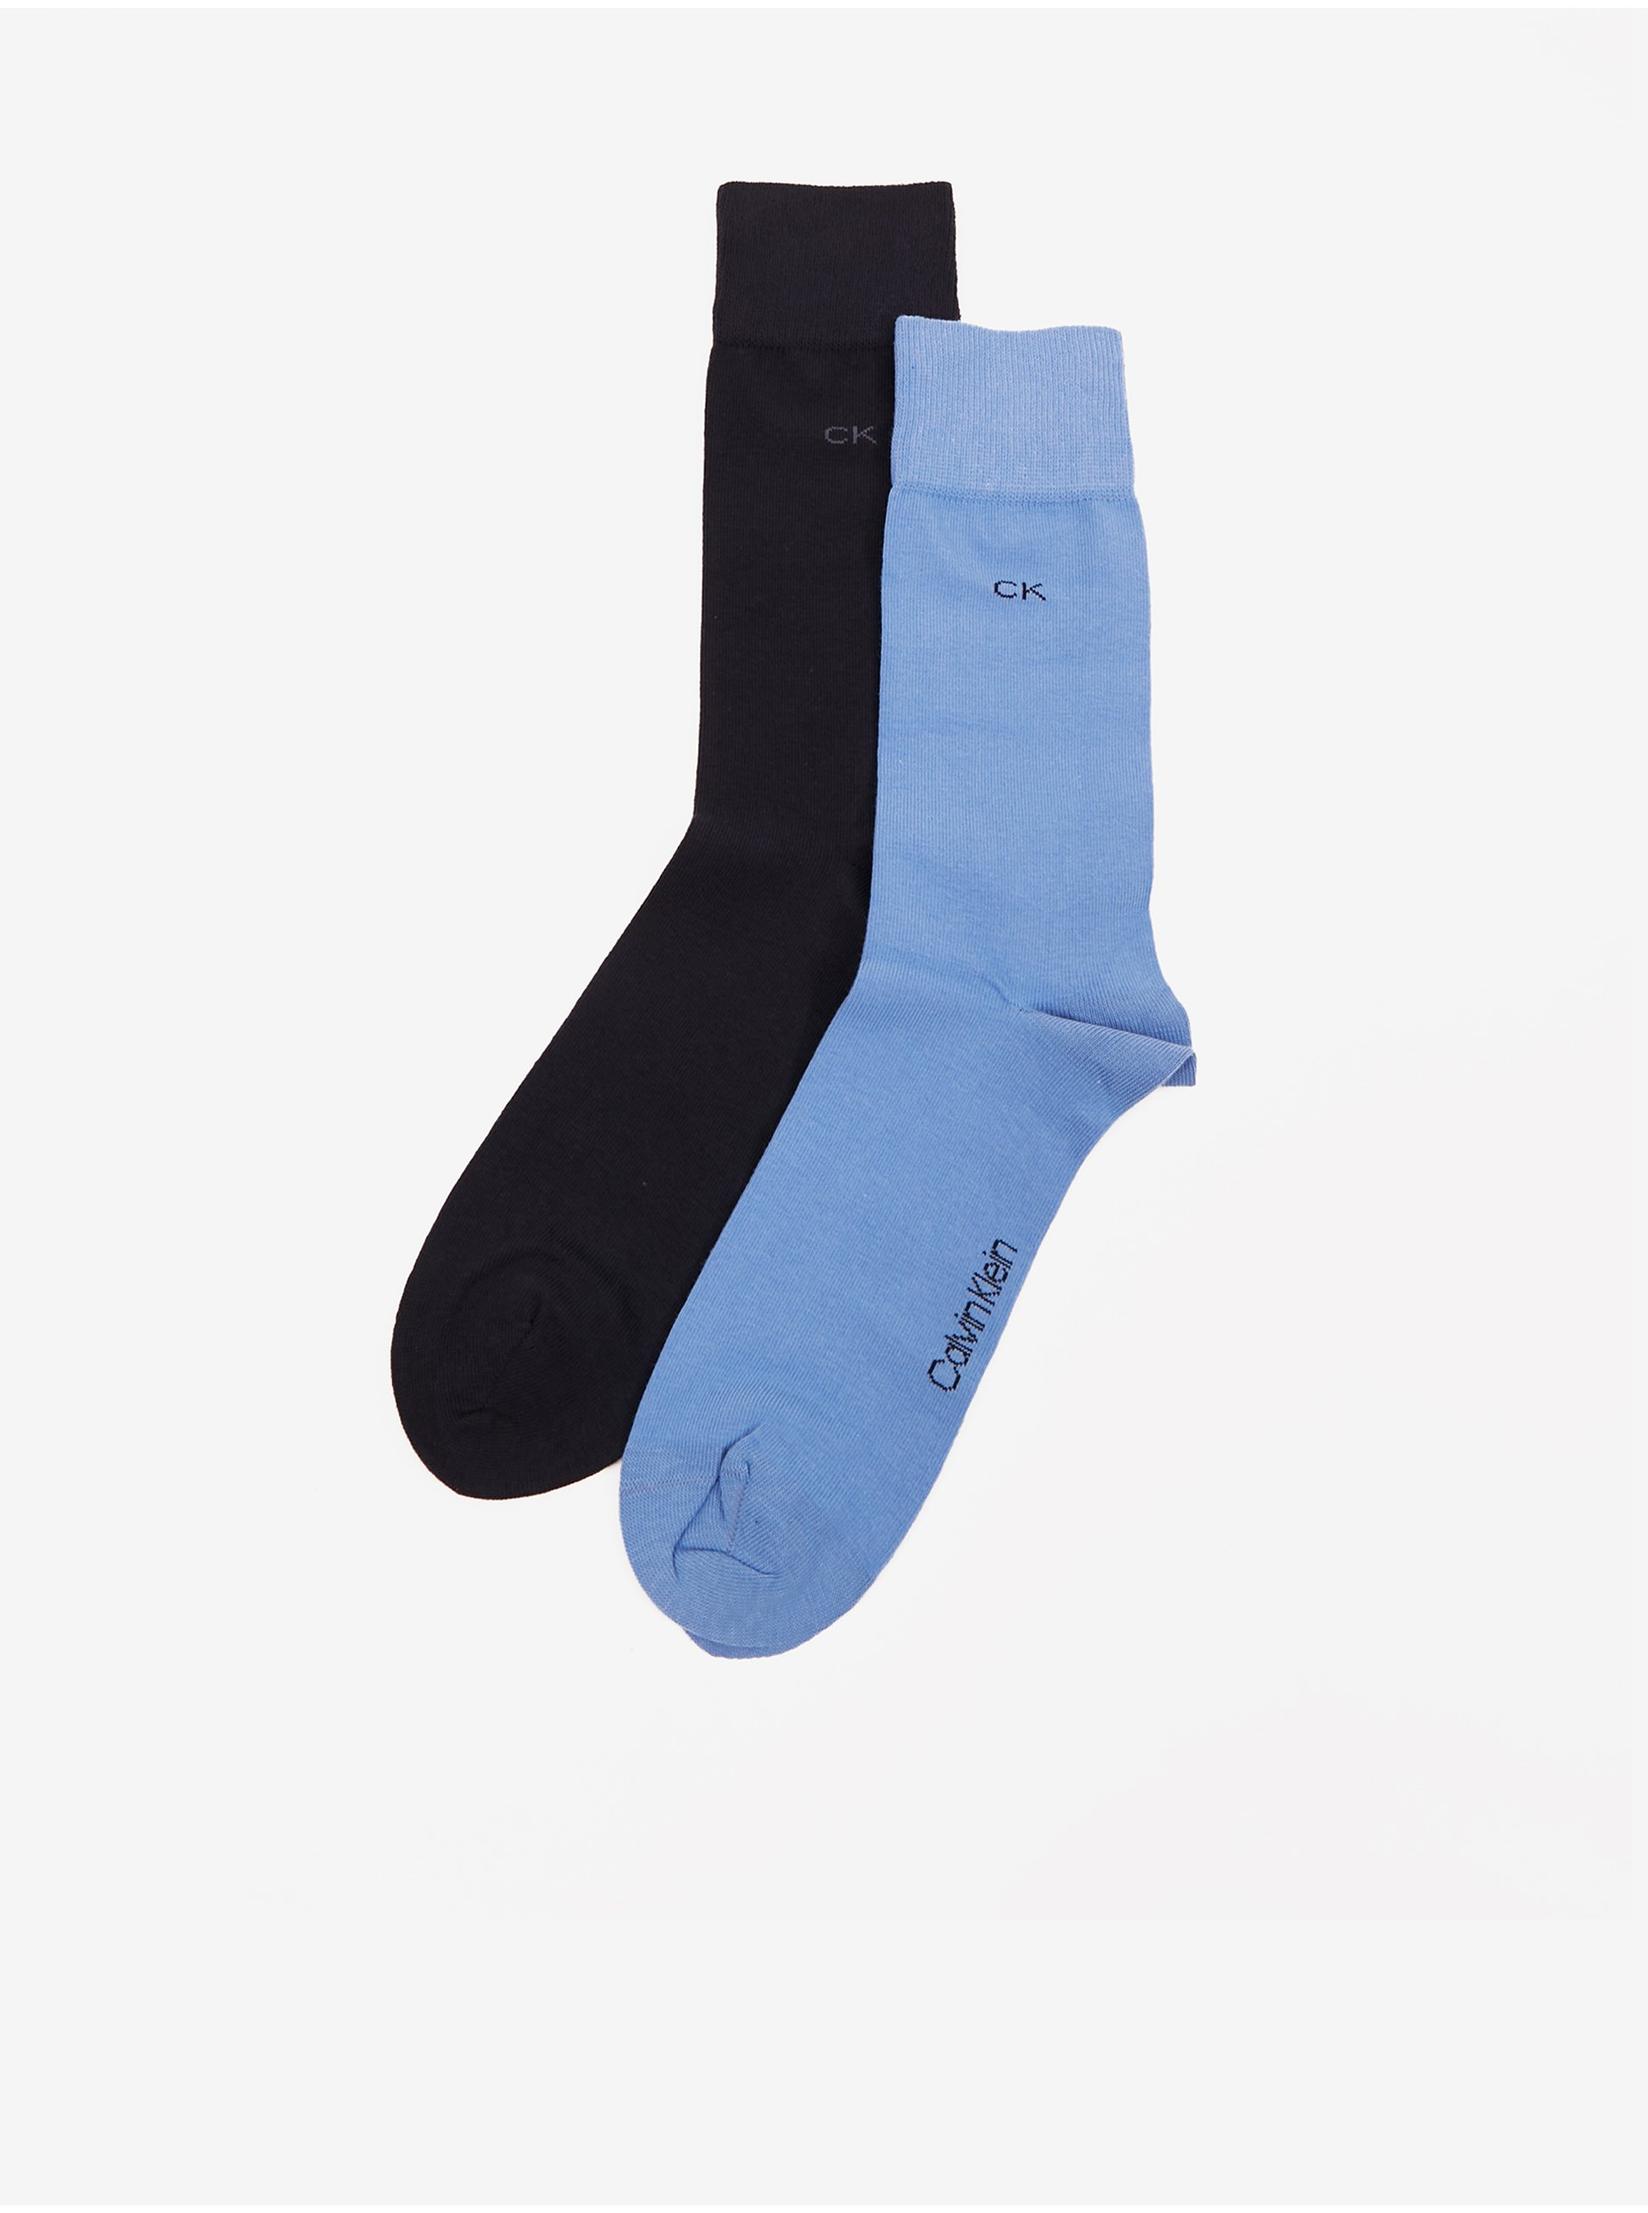 Slike CALVIN KLEIN UNDERWEAR Muške čarape 2/1 crno-plave